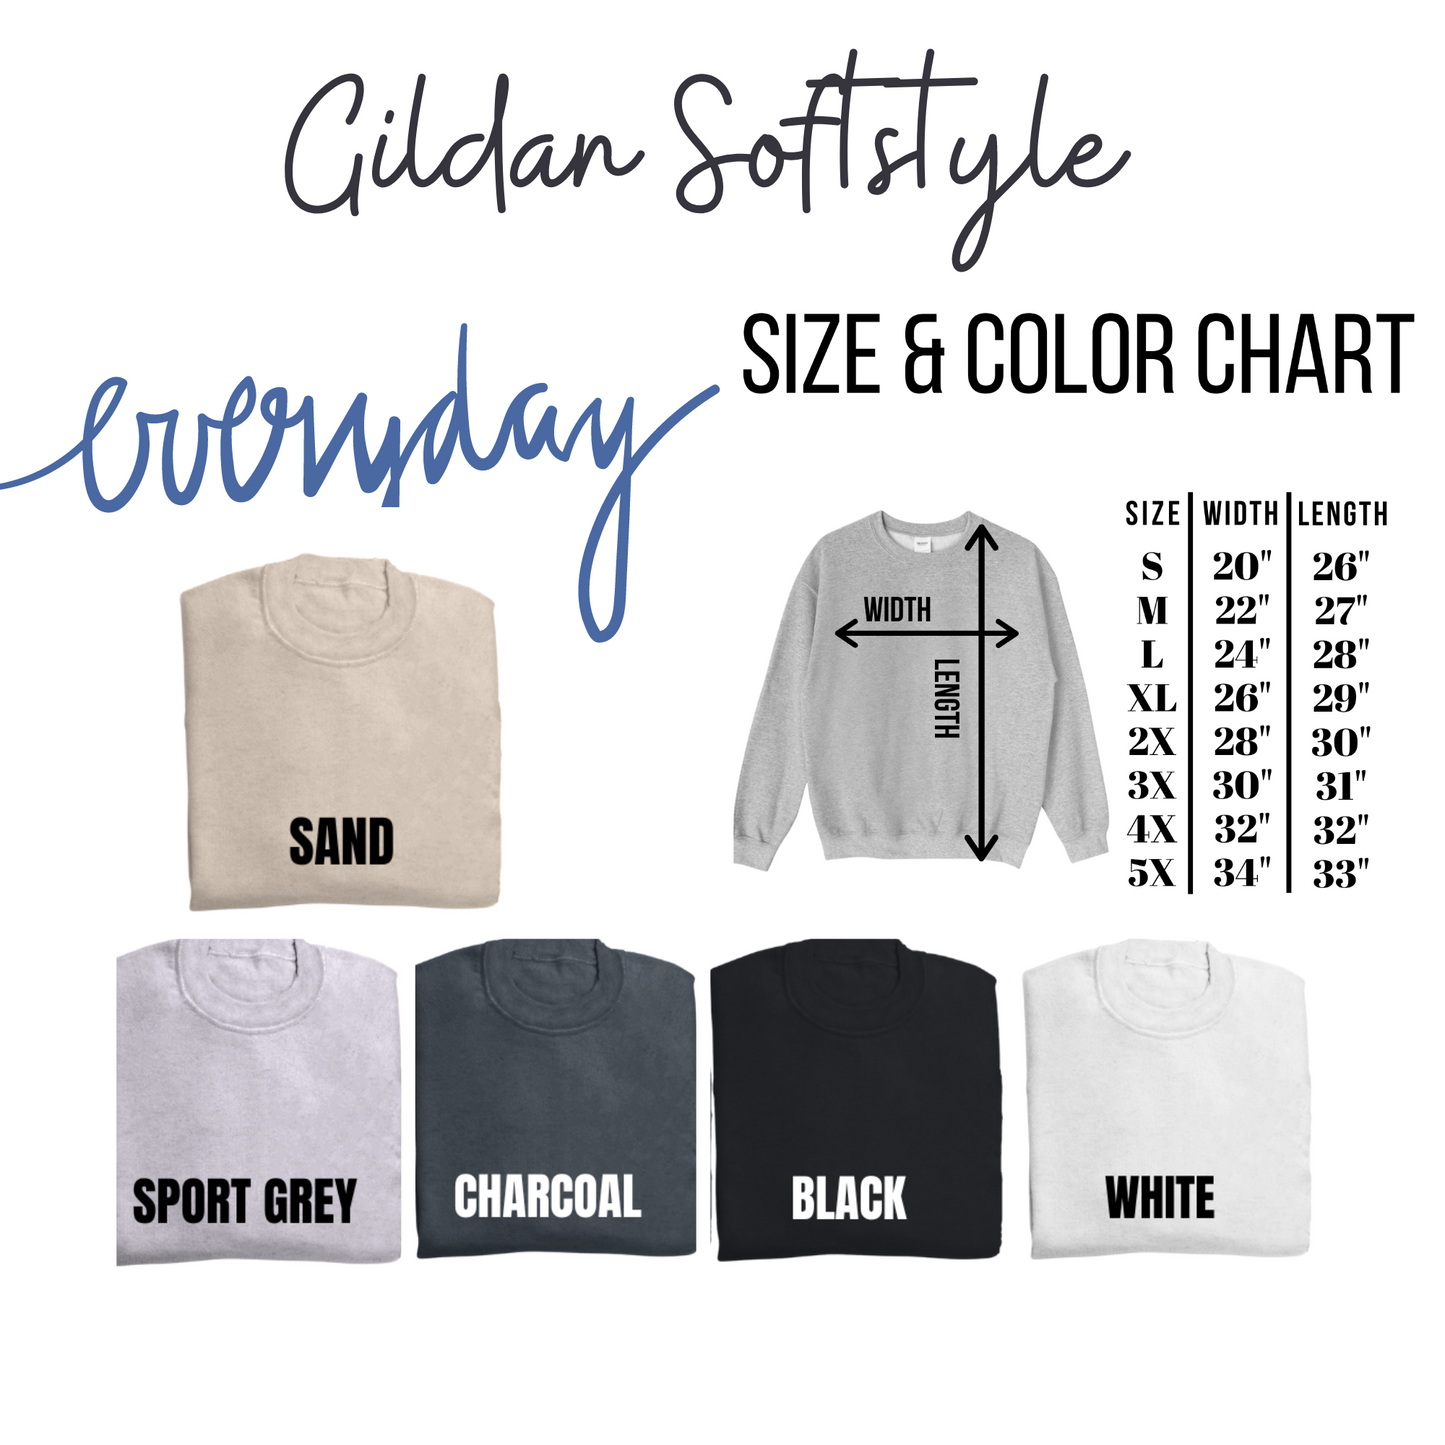 Preppy Tigers Gildan Softstyle Sweatshirt or T-shirt